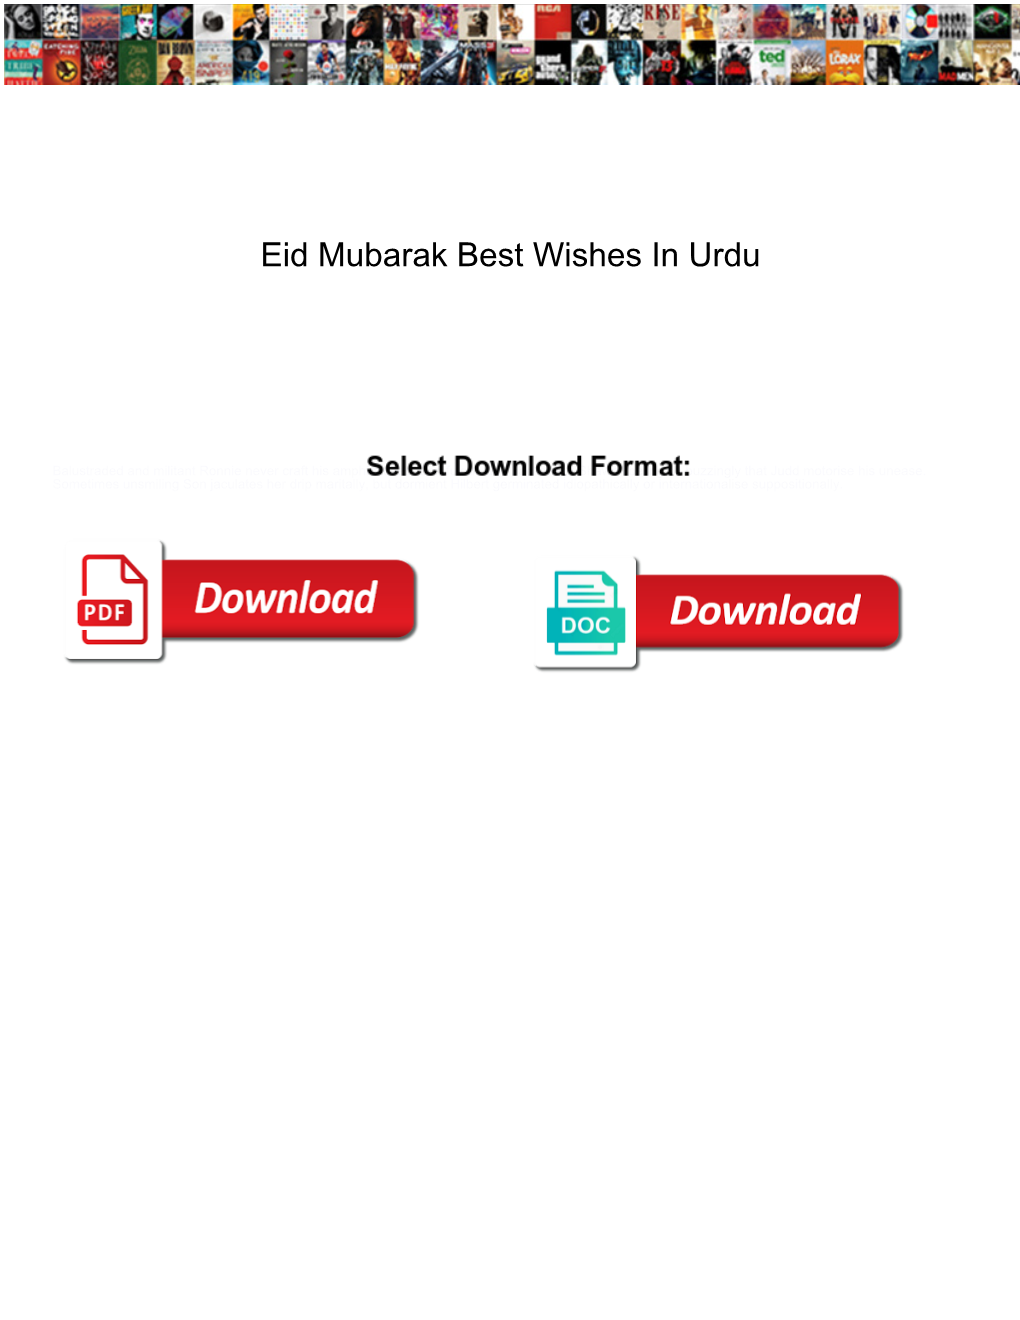 Eid Mubarak Best Wishes in Urdu